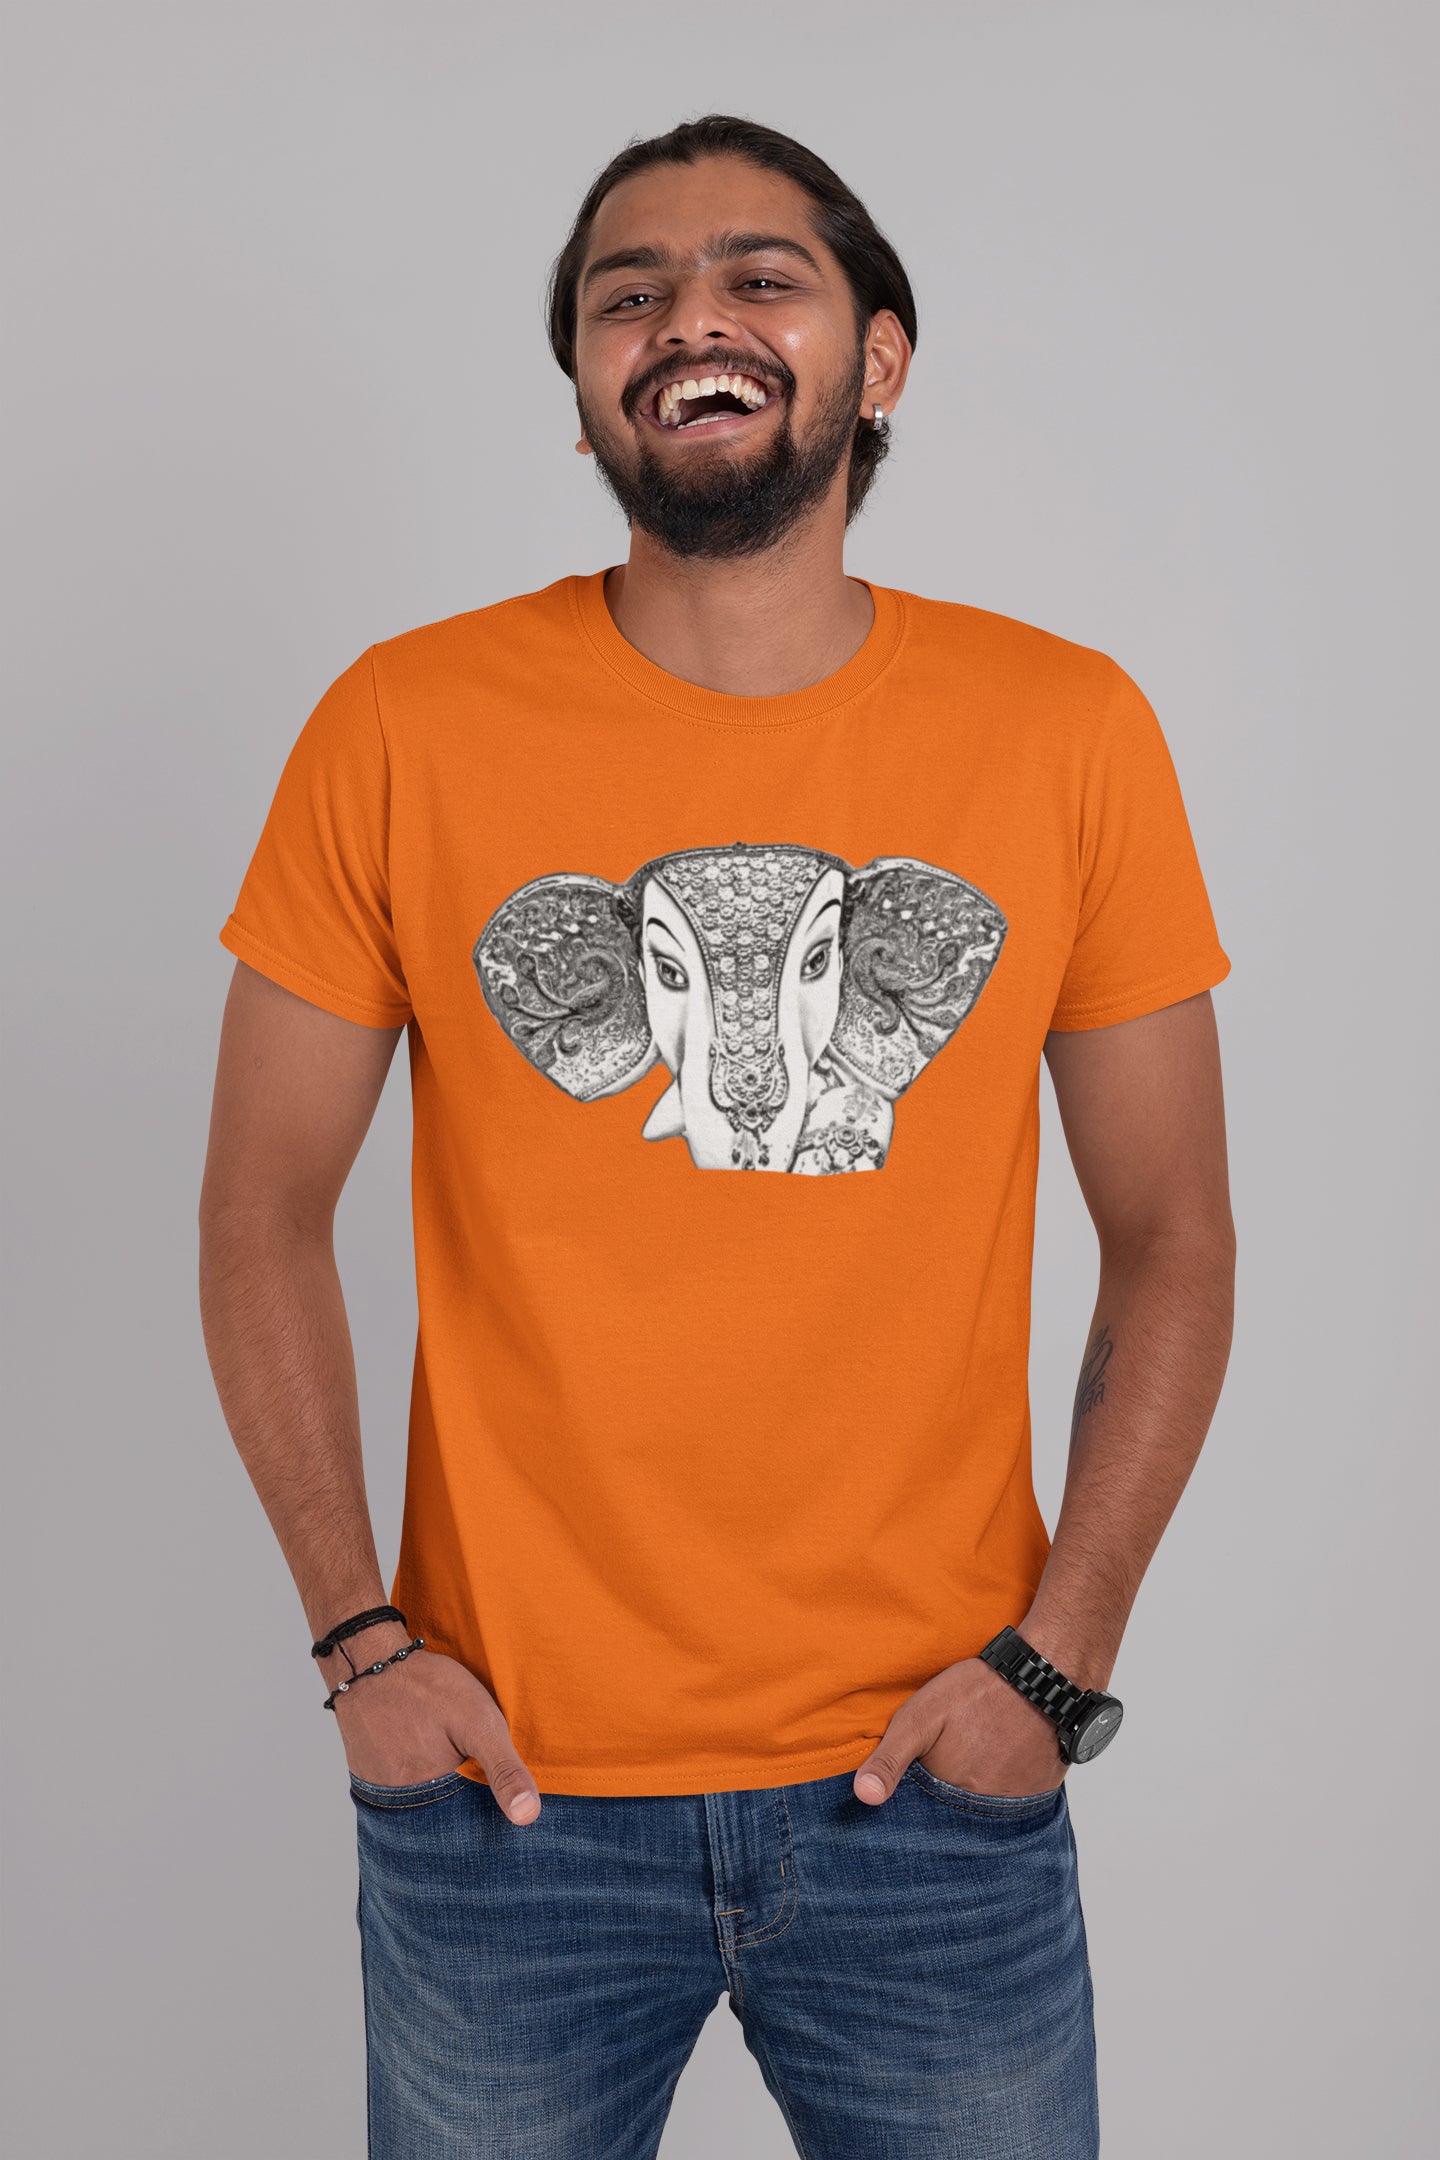 Summer T-shirt for Men(Ganpati Pencil Sketch Full Face)